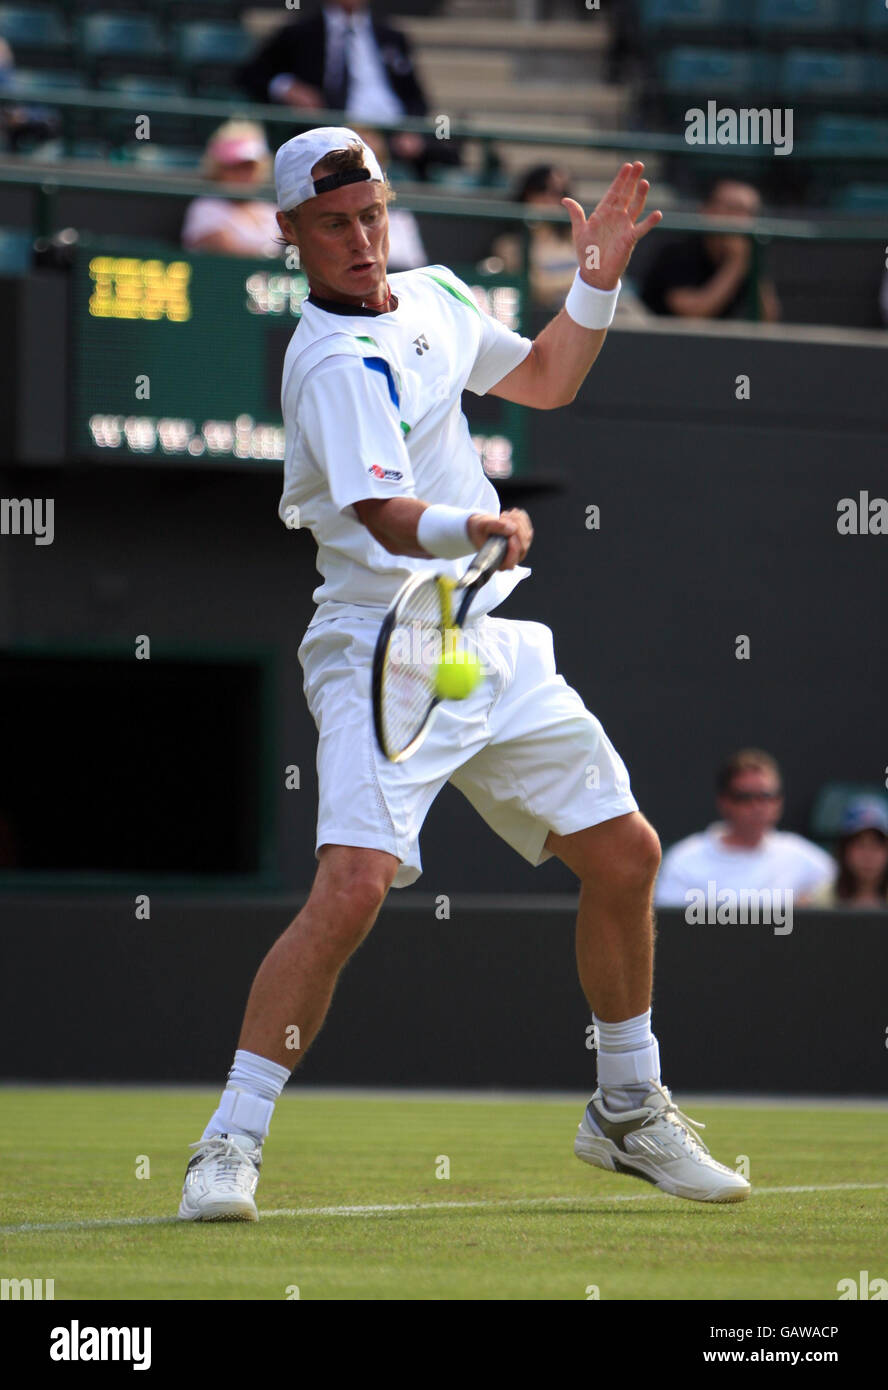 L'australiano Lleyton Hewitt in azione durante i Campionati di Wimbledon 2008 all'All England Tennis Club di Wimbledon. Foto Stock